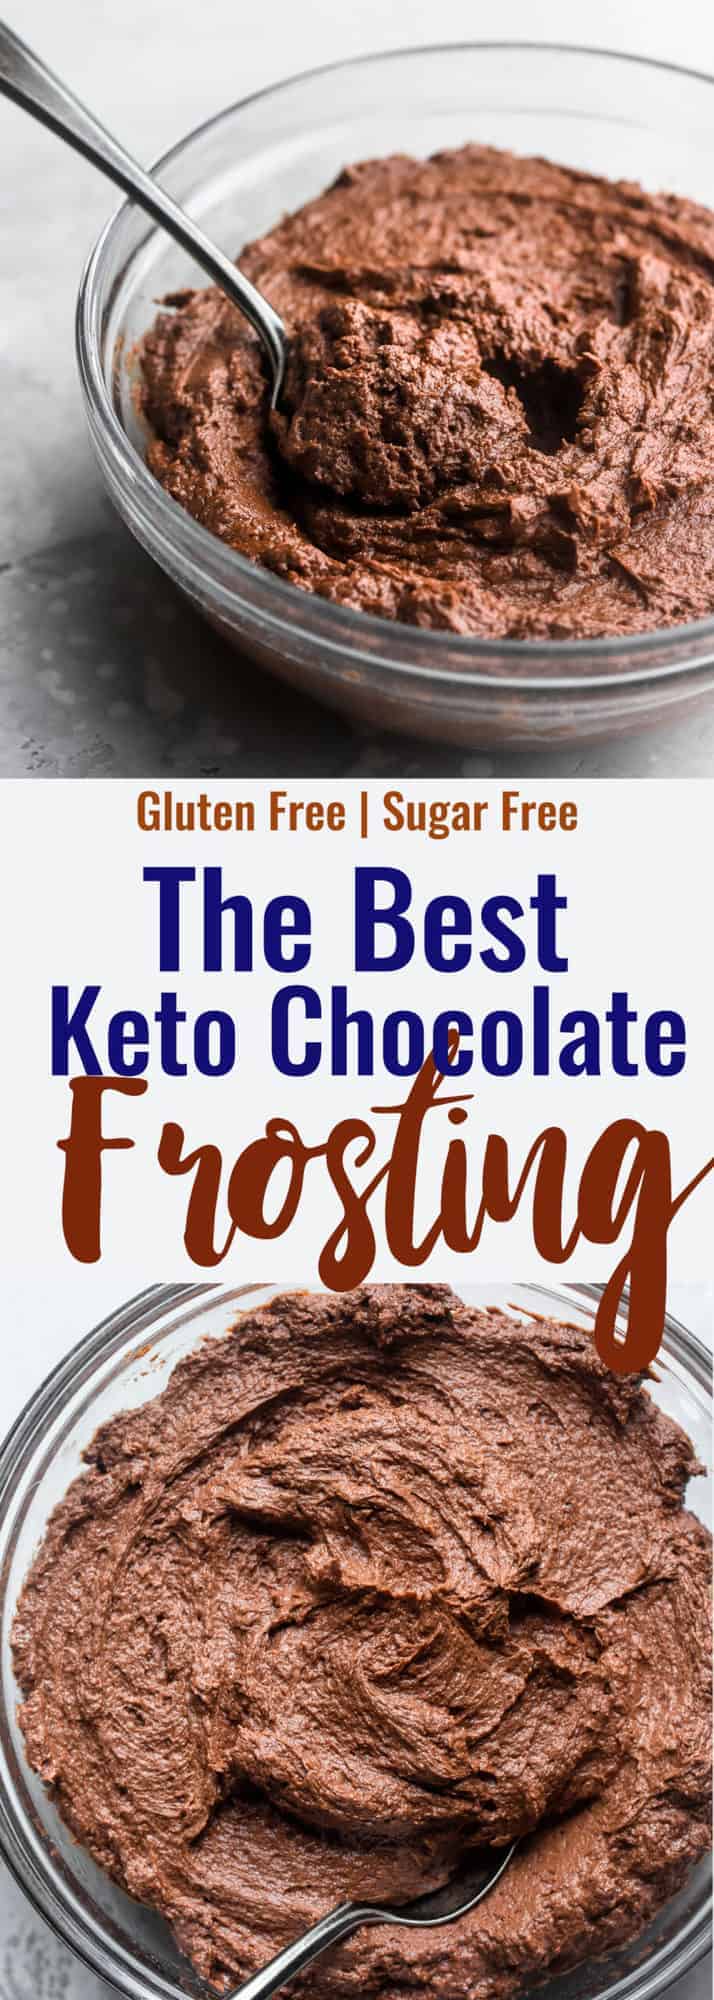 Keto Chocolate Frosting - Food Faith Fitness